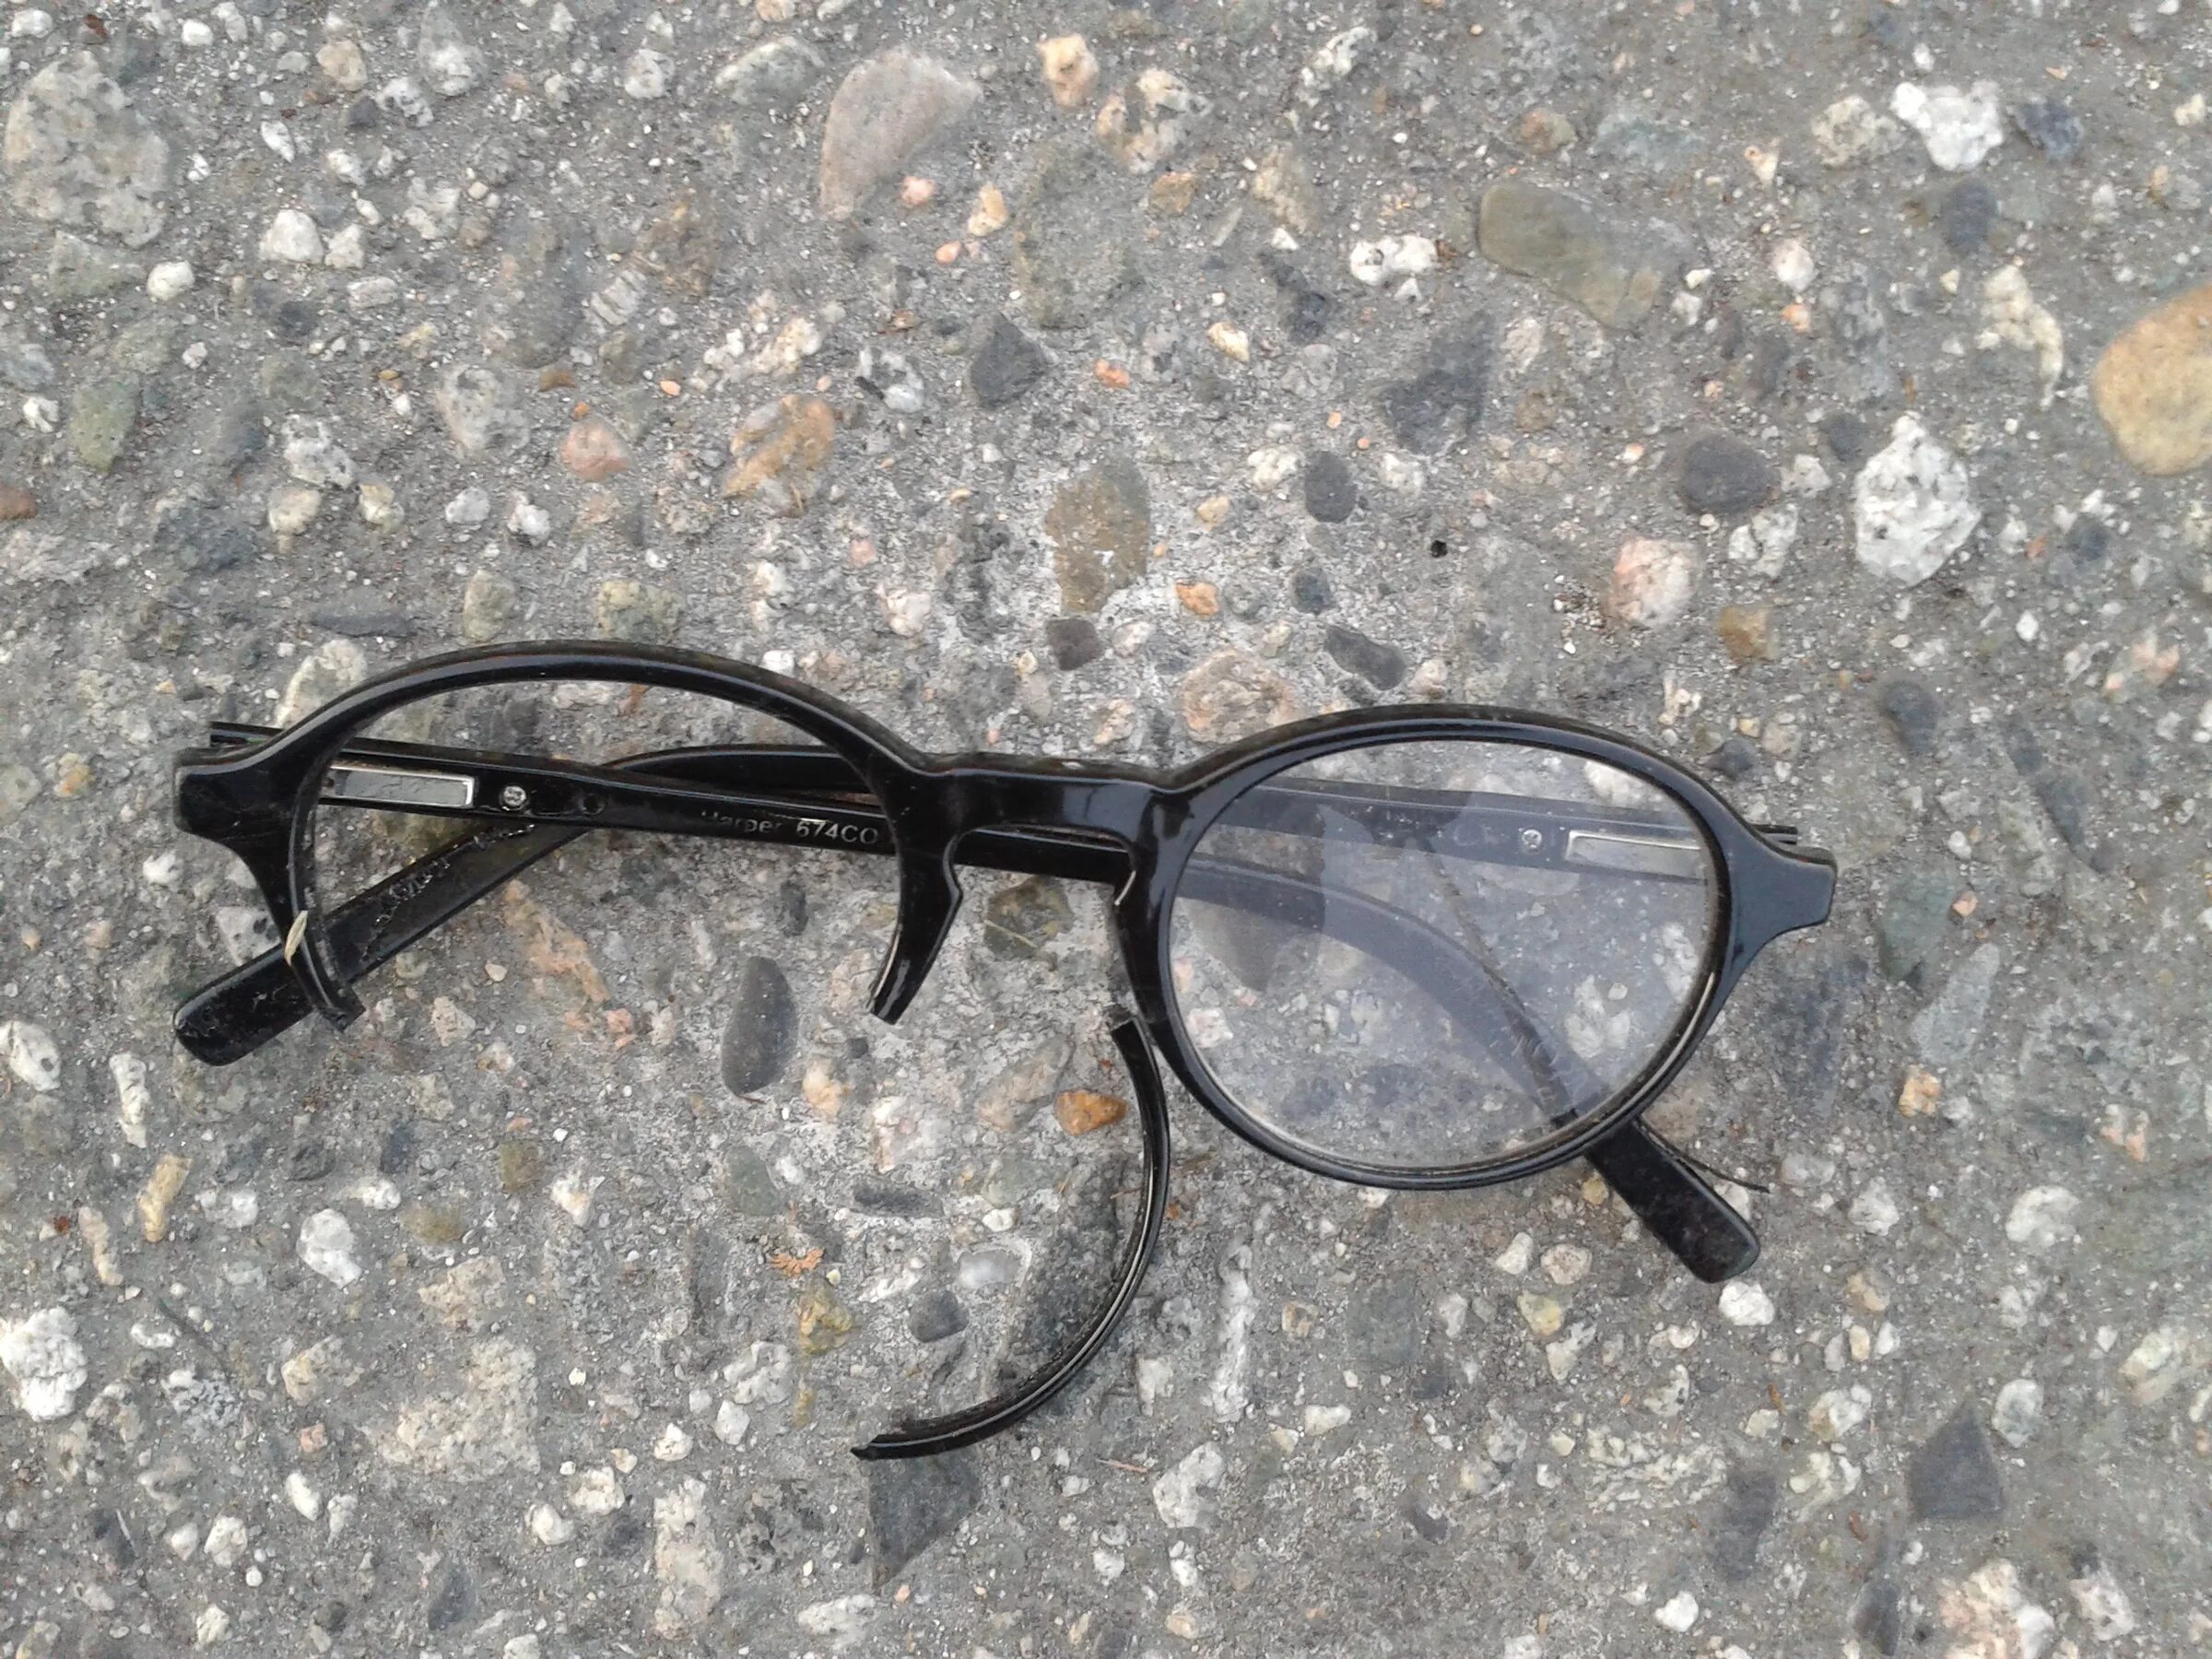 Разбитое очко. Разбитые очки. Очки сломались. Треснутые очки. Поломанные очки.